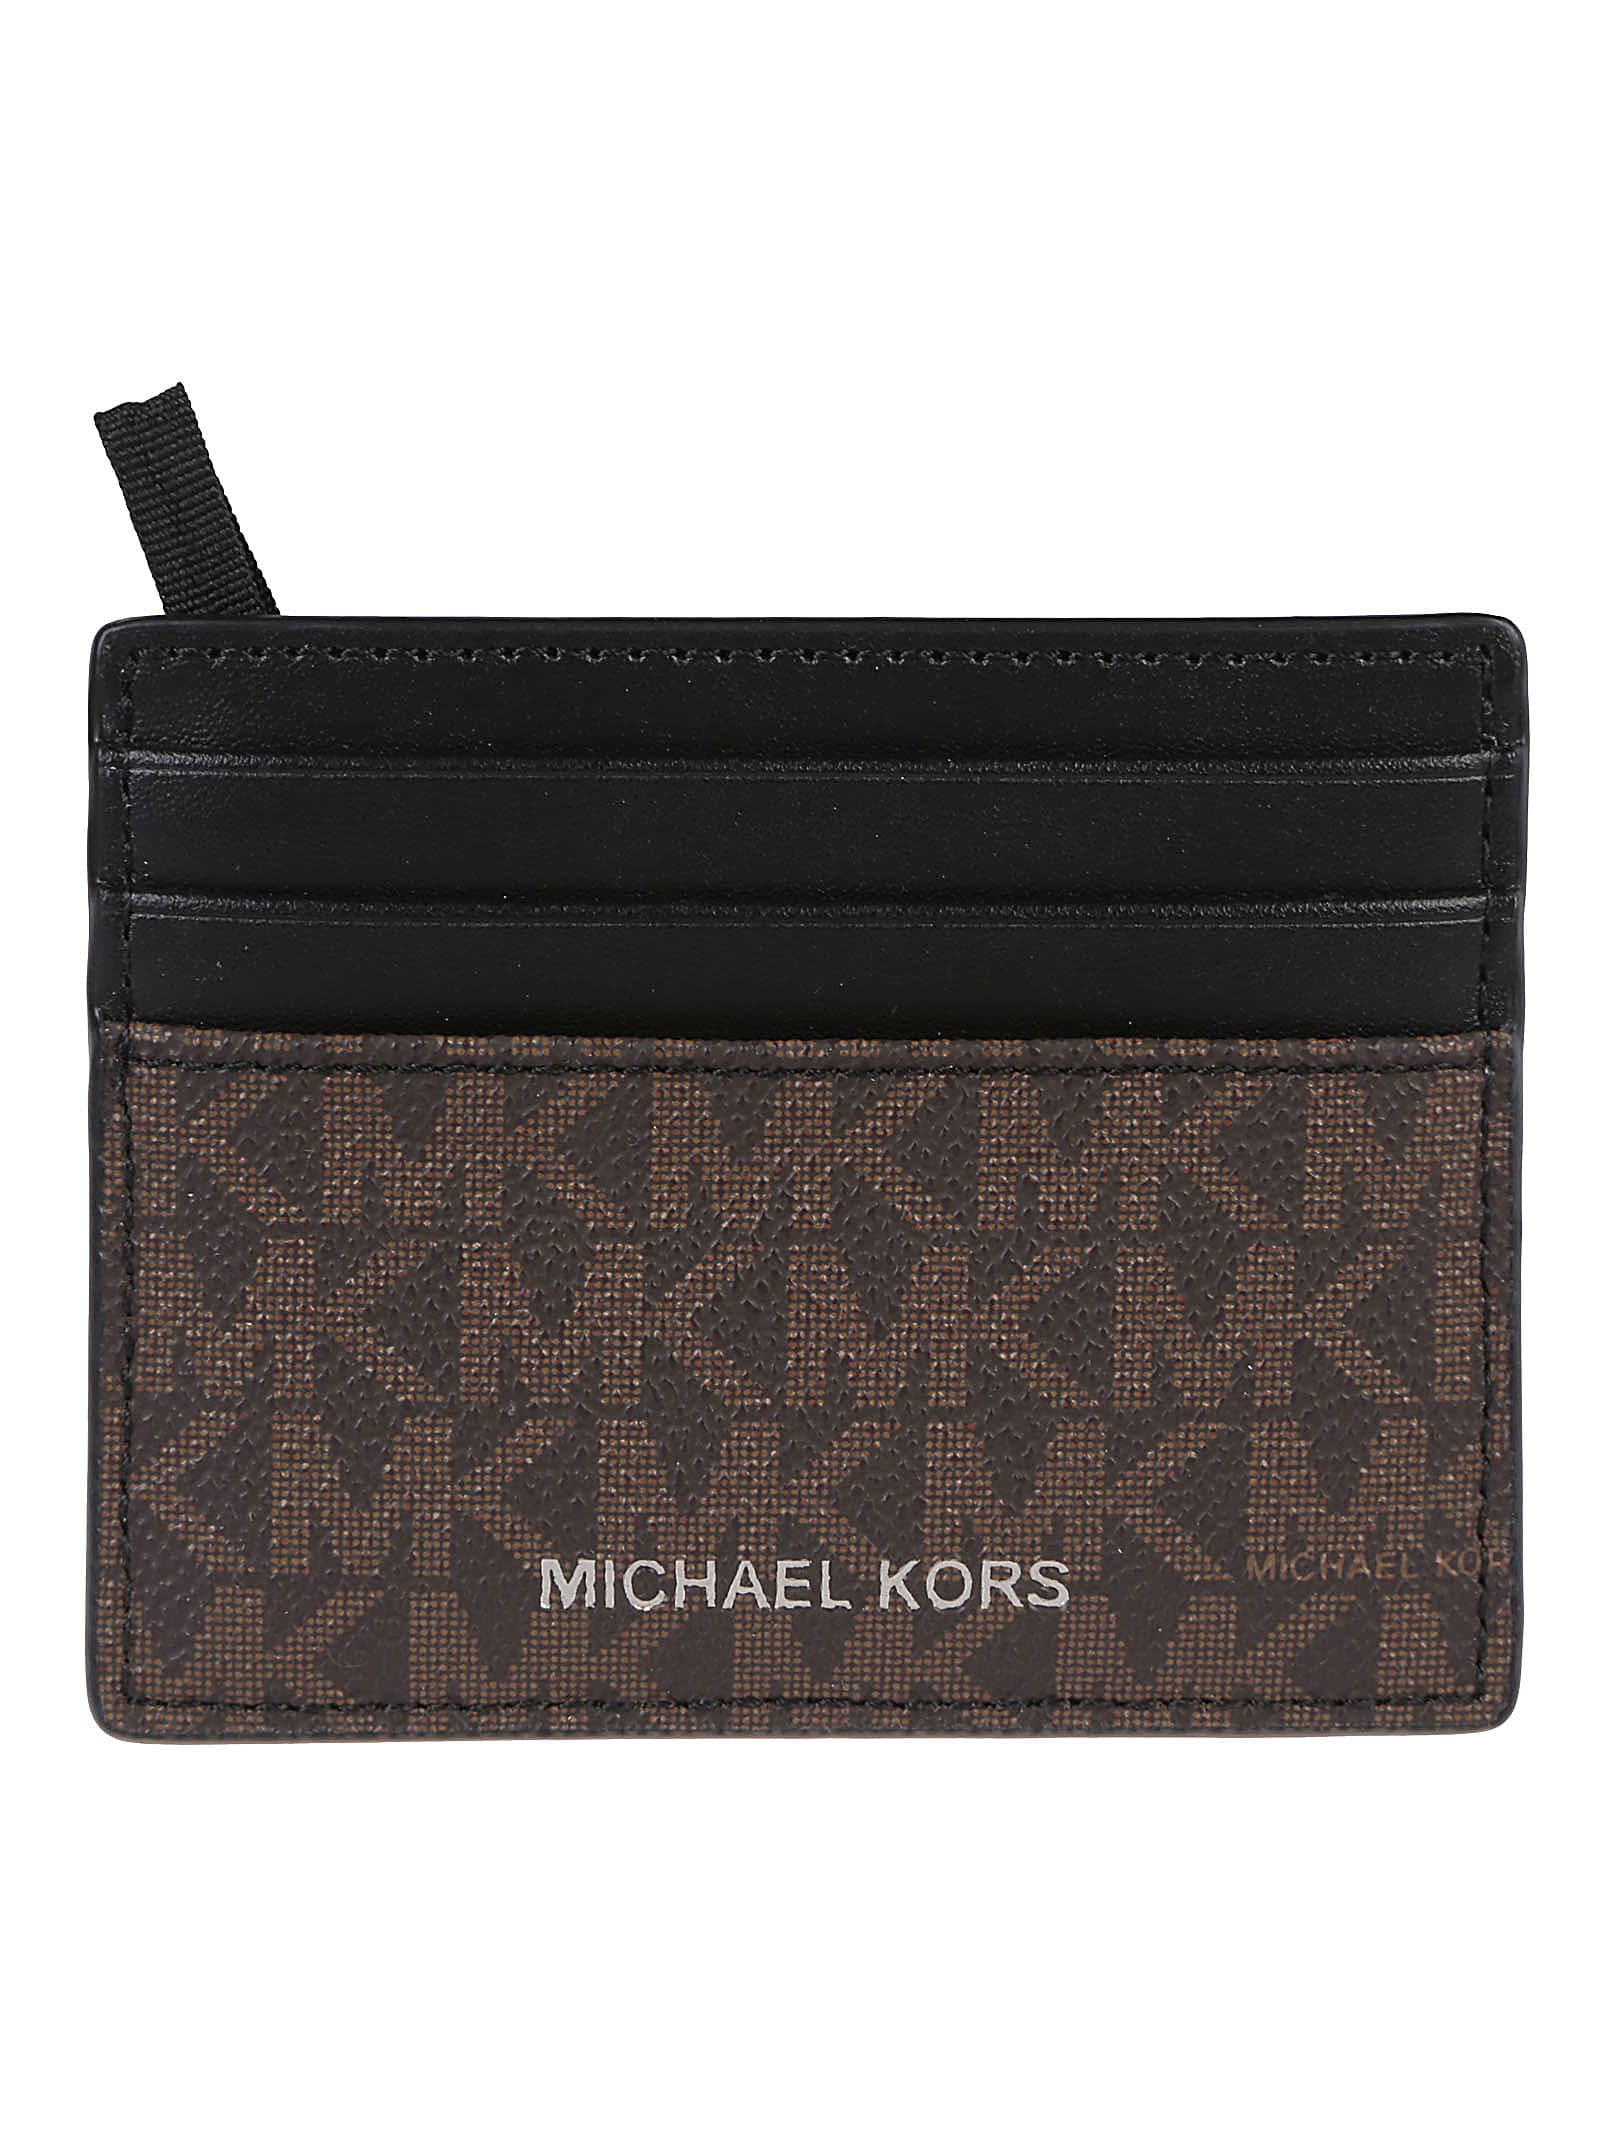 Michael Kors Greyson Credit Card Holder In Brown/black